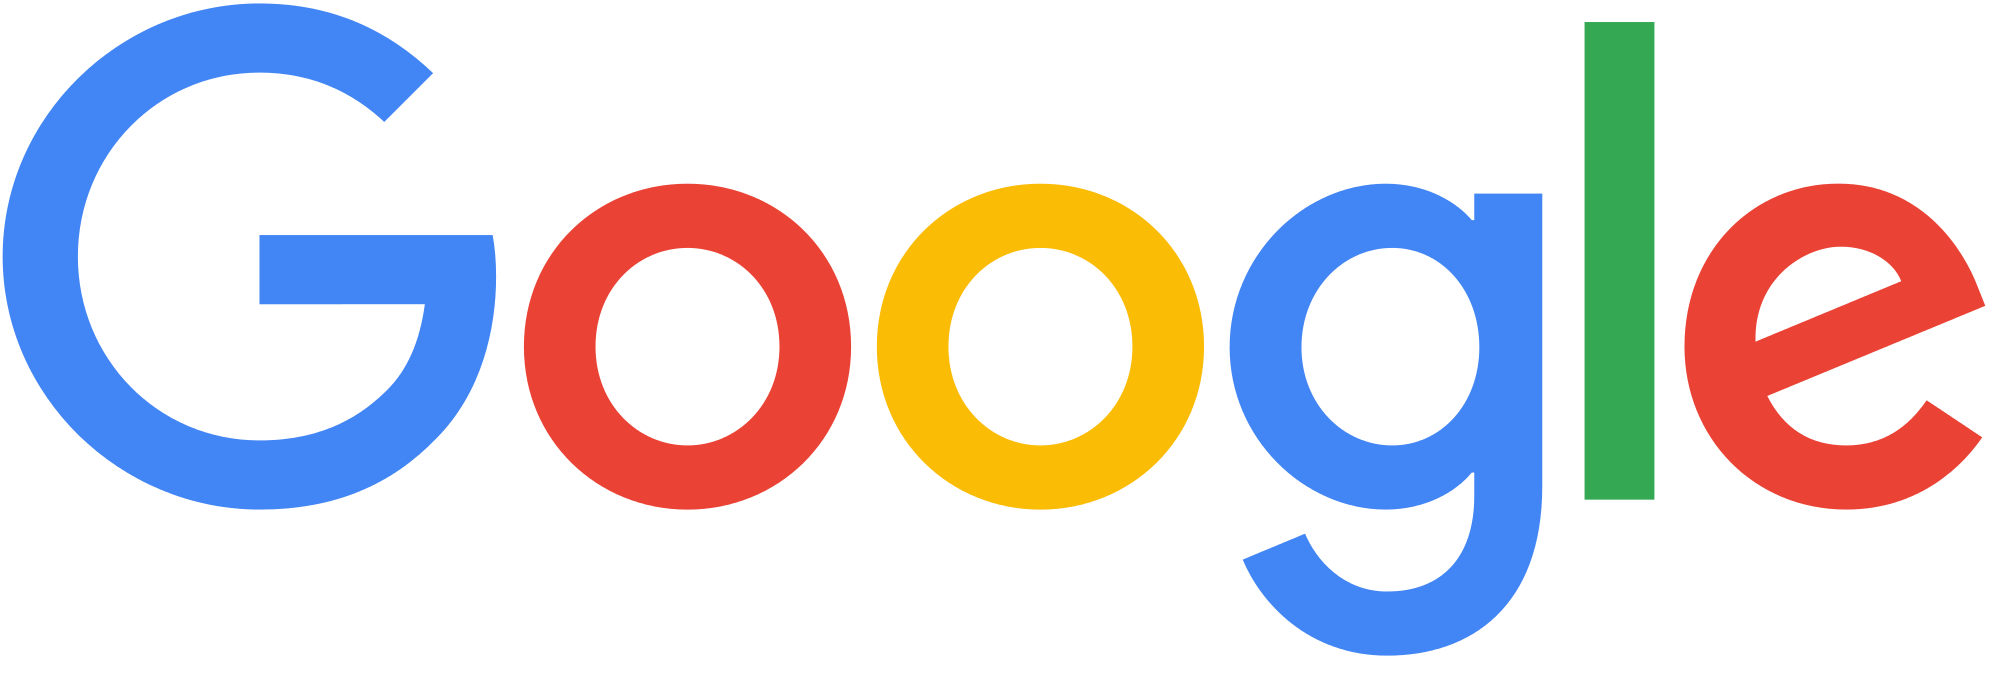 Featured on Google - Google transparent logo